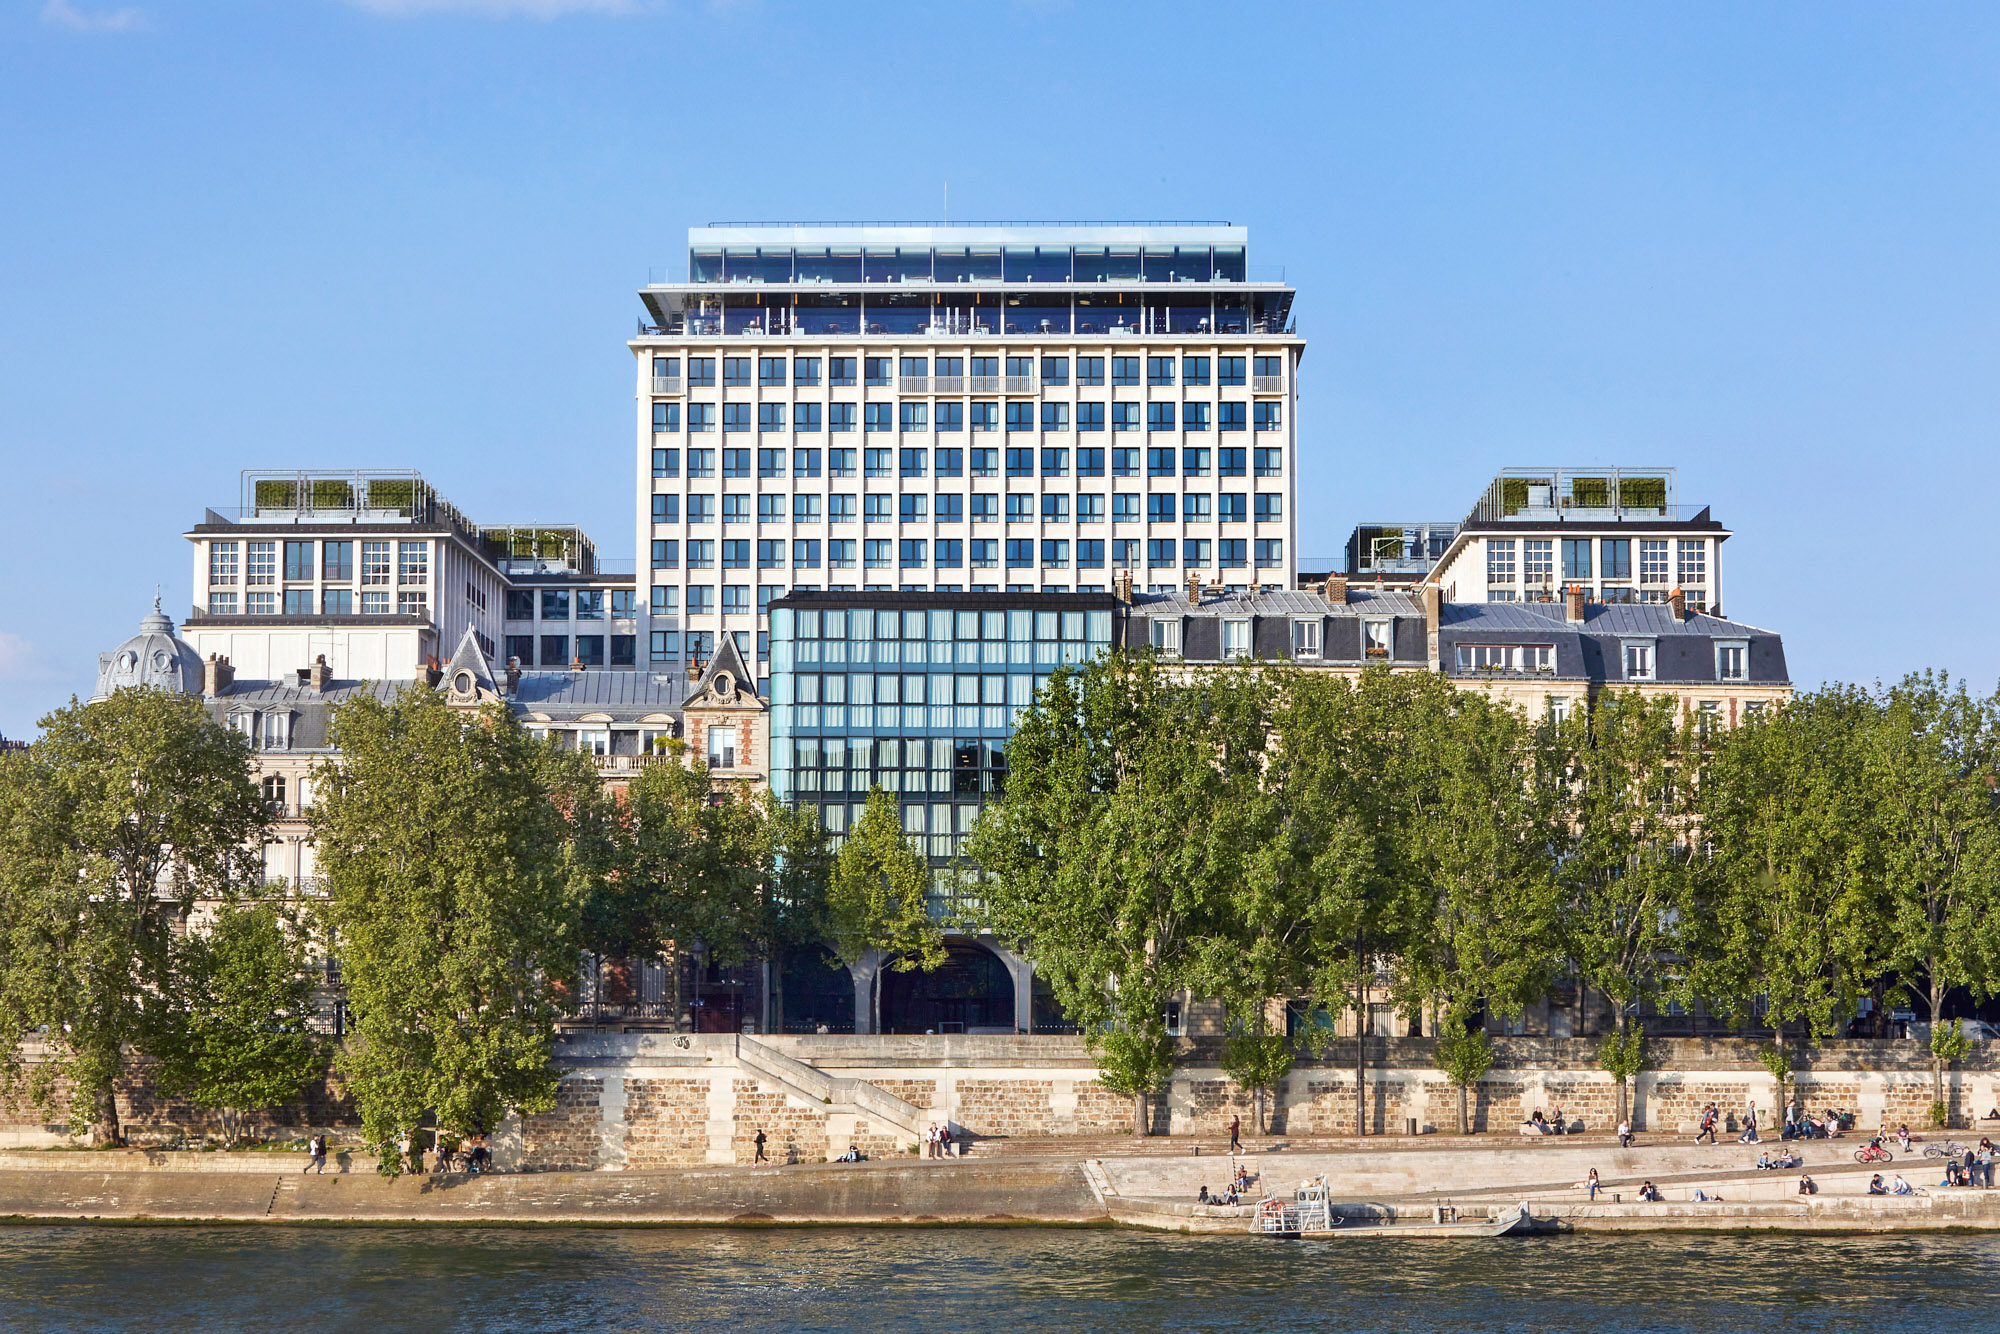 Morland-Mixité Paris by Calq & David Chipperfield Architects